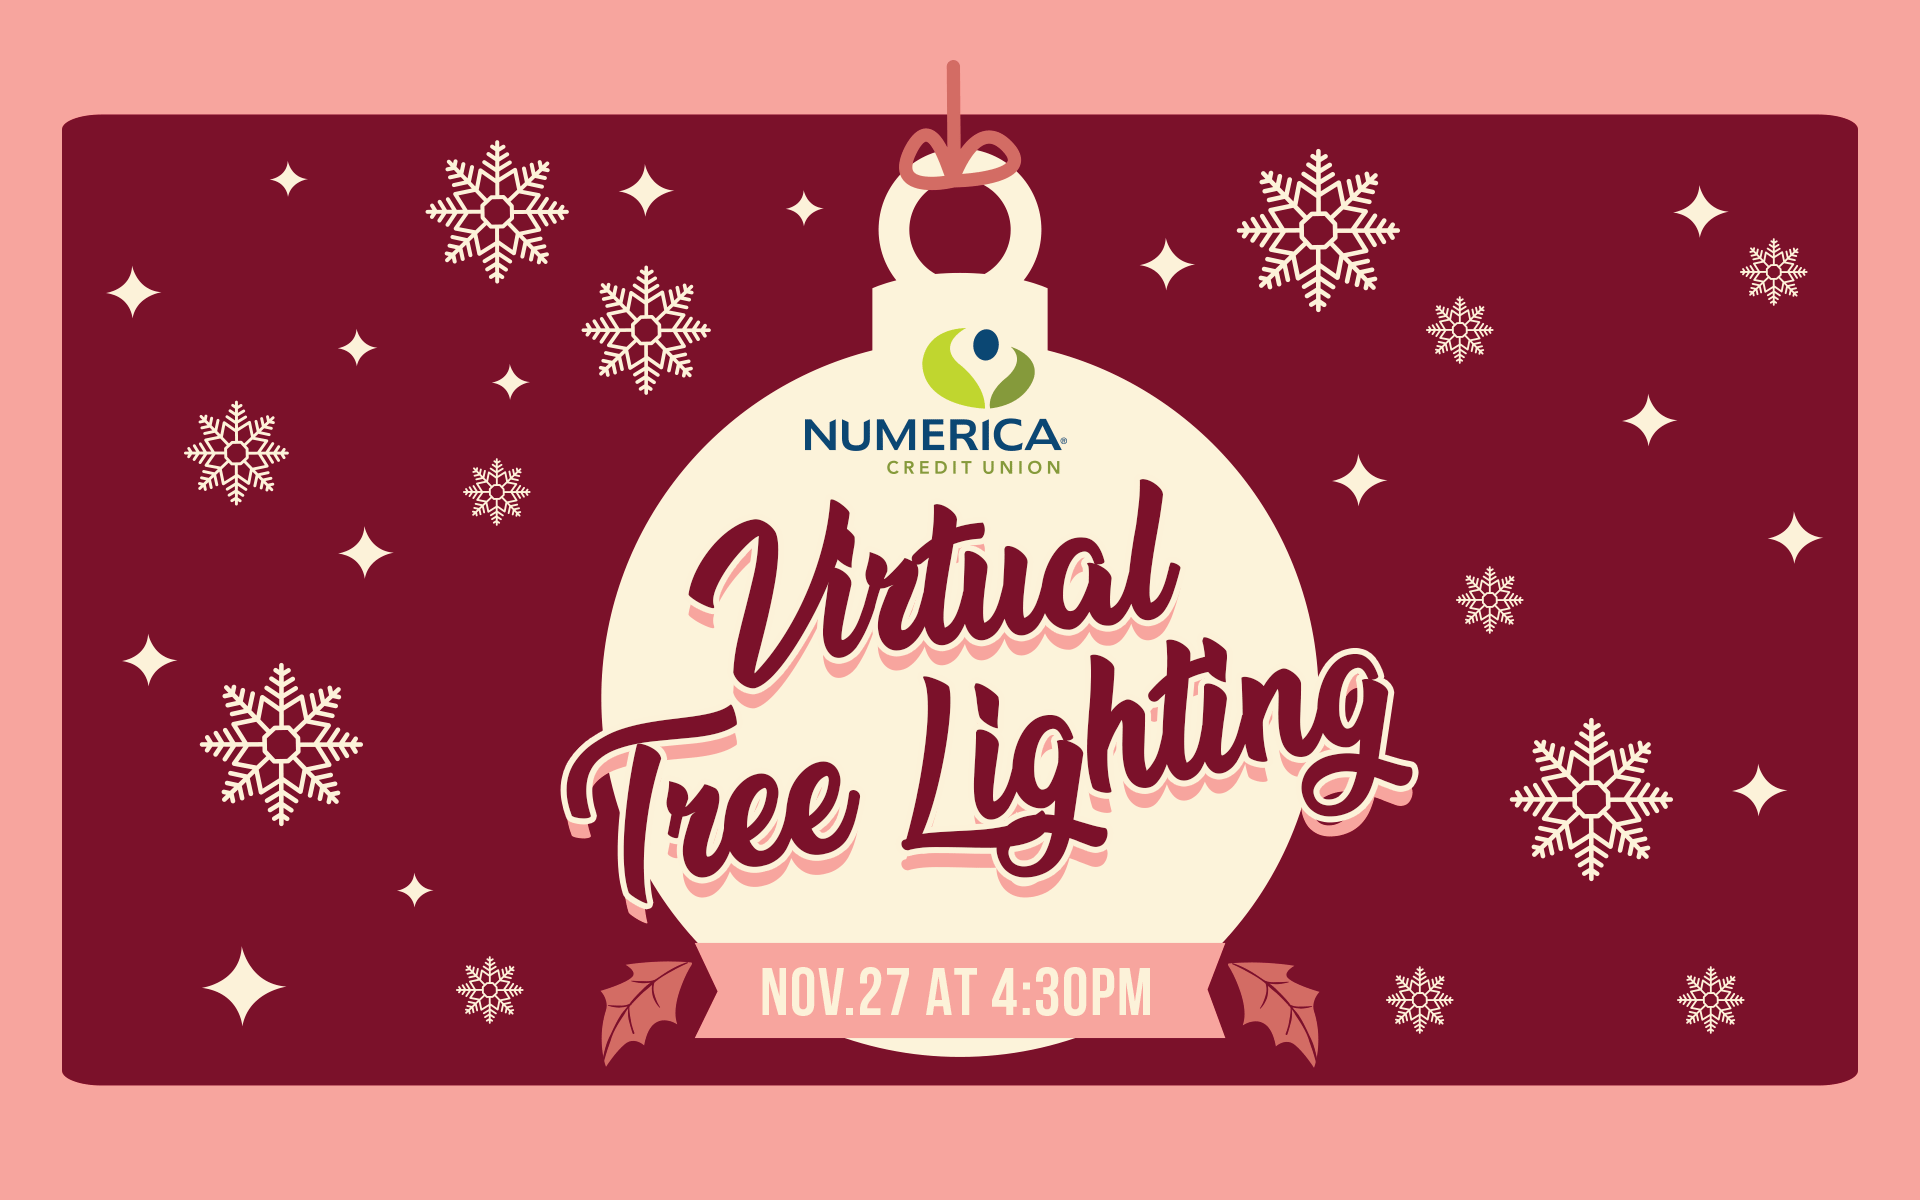 Numerica’s Virtual Tree Lighting Event City of Spokane, Washington